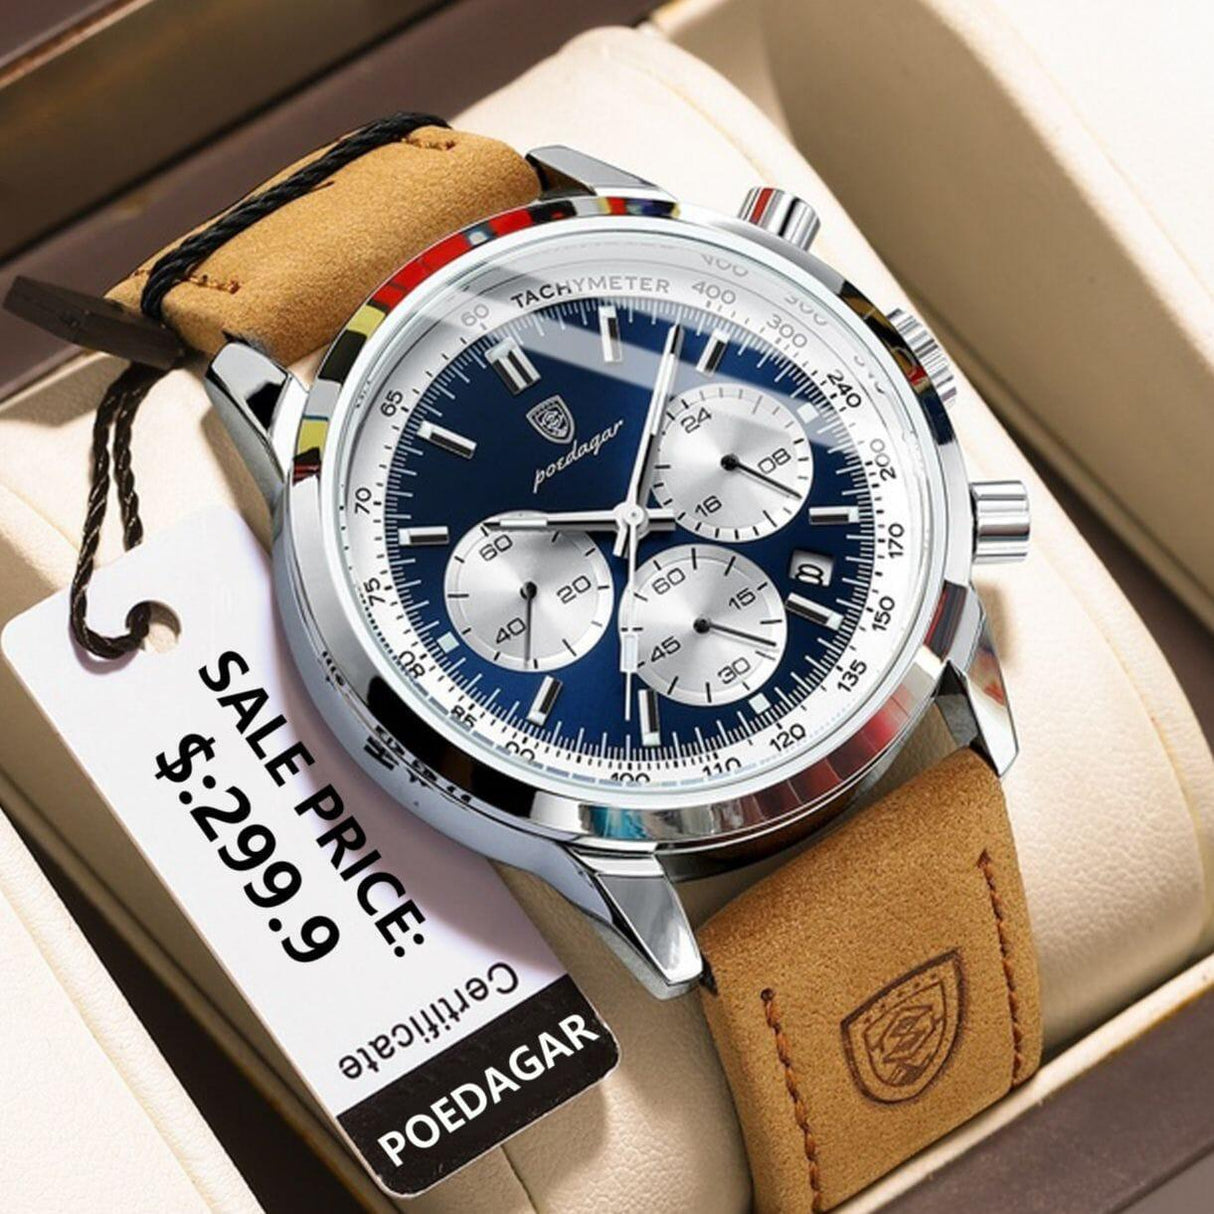 POEDAGAR Luxury Man Watch High Quality Waterproof Chronograph Luminous Men's Wristwatch Leather Men Quartz Watches Casual Clock - AVINCET